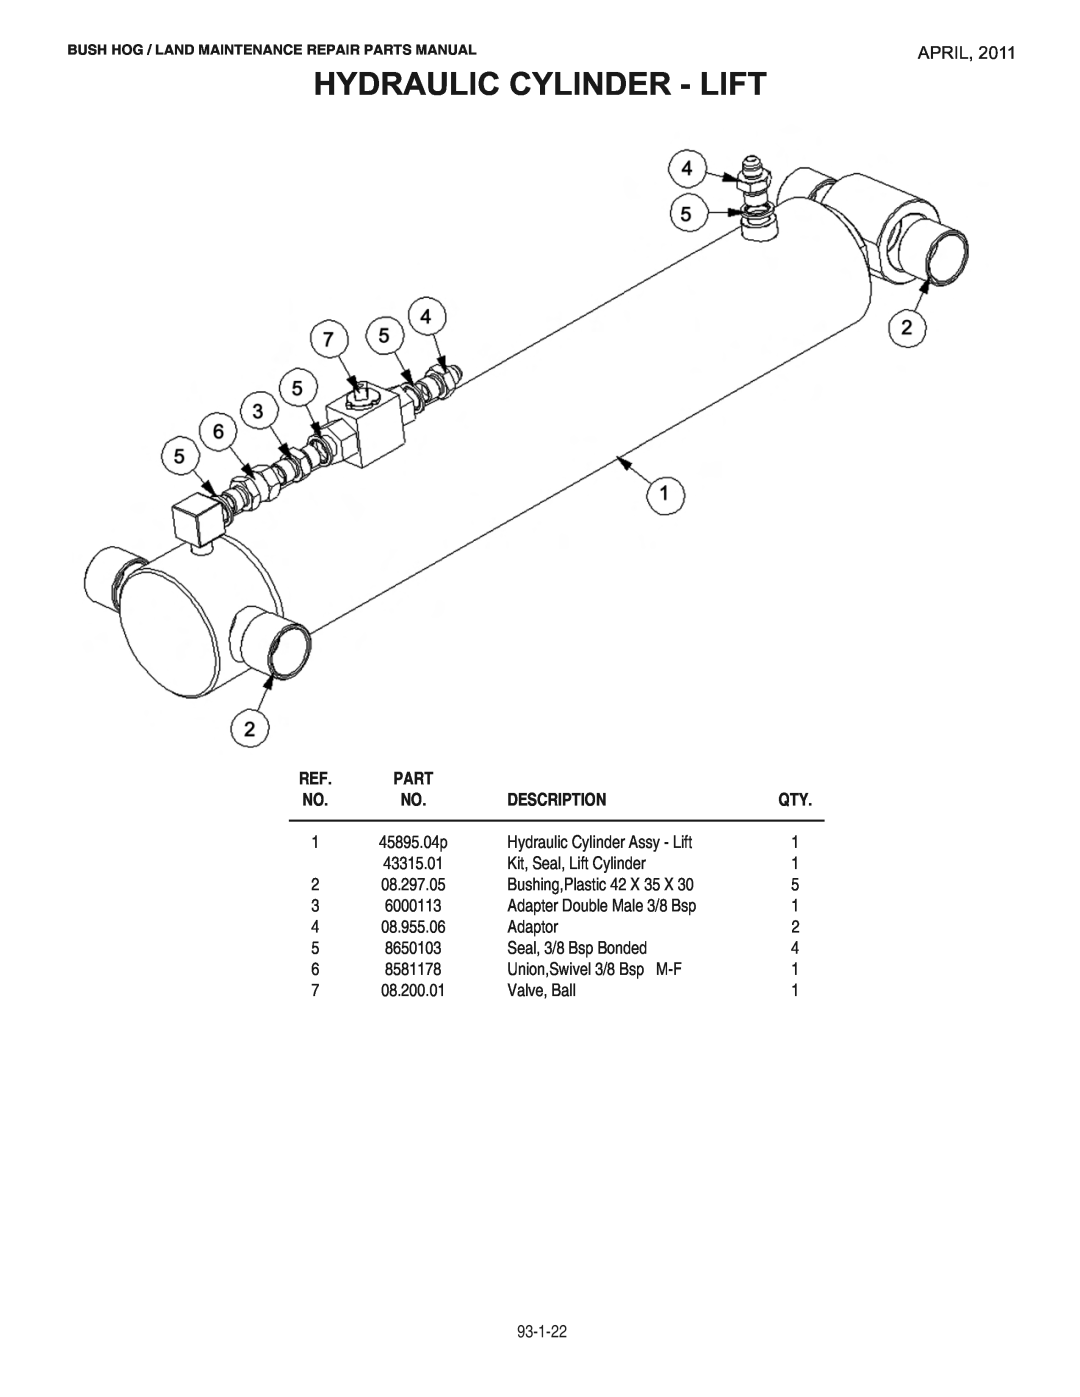 Bush Hog RMB1865E manual Hydraulic Cylinder - Lift, April, Description, Bush Hog / Land Maintenance Repair Parts Manual 